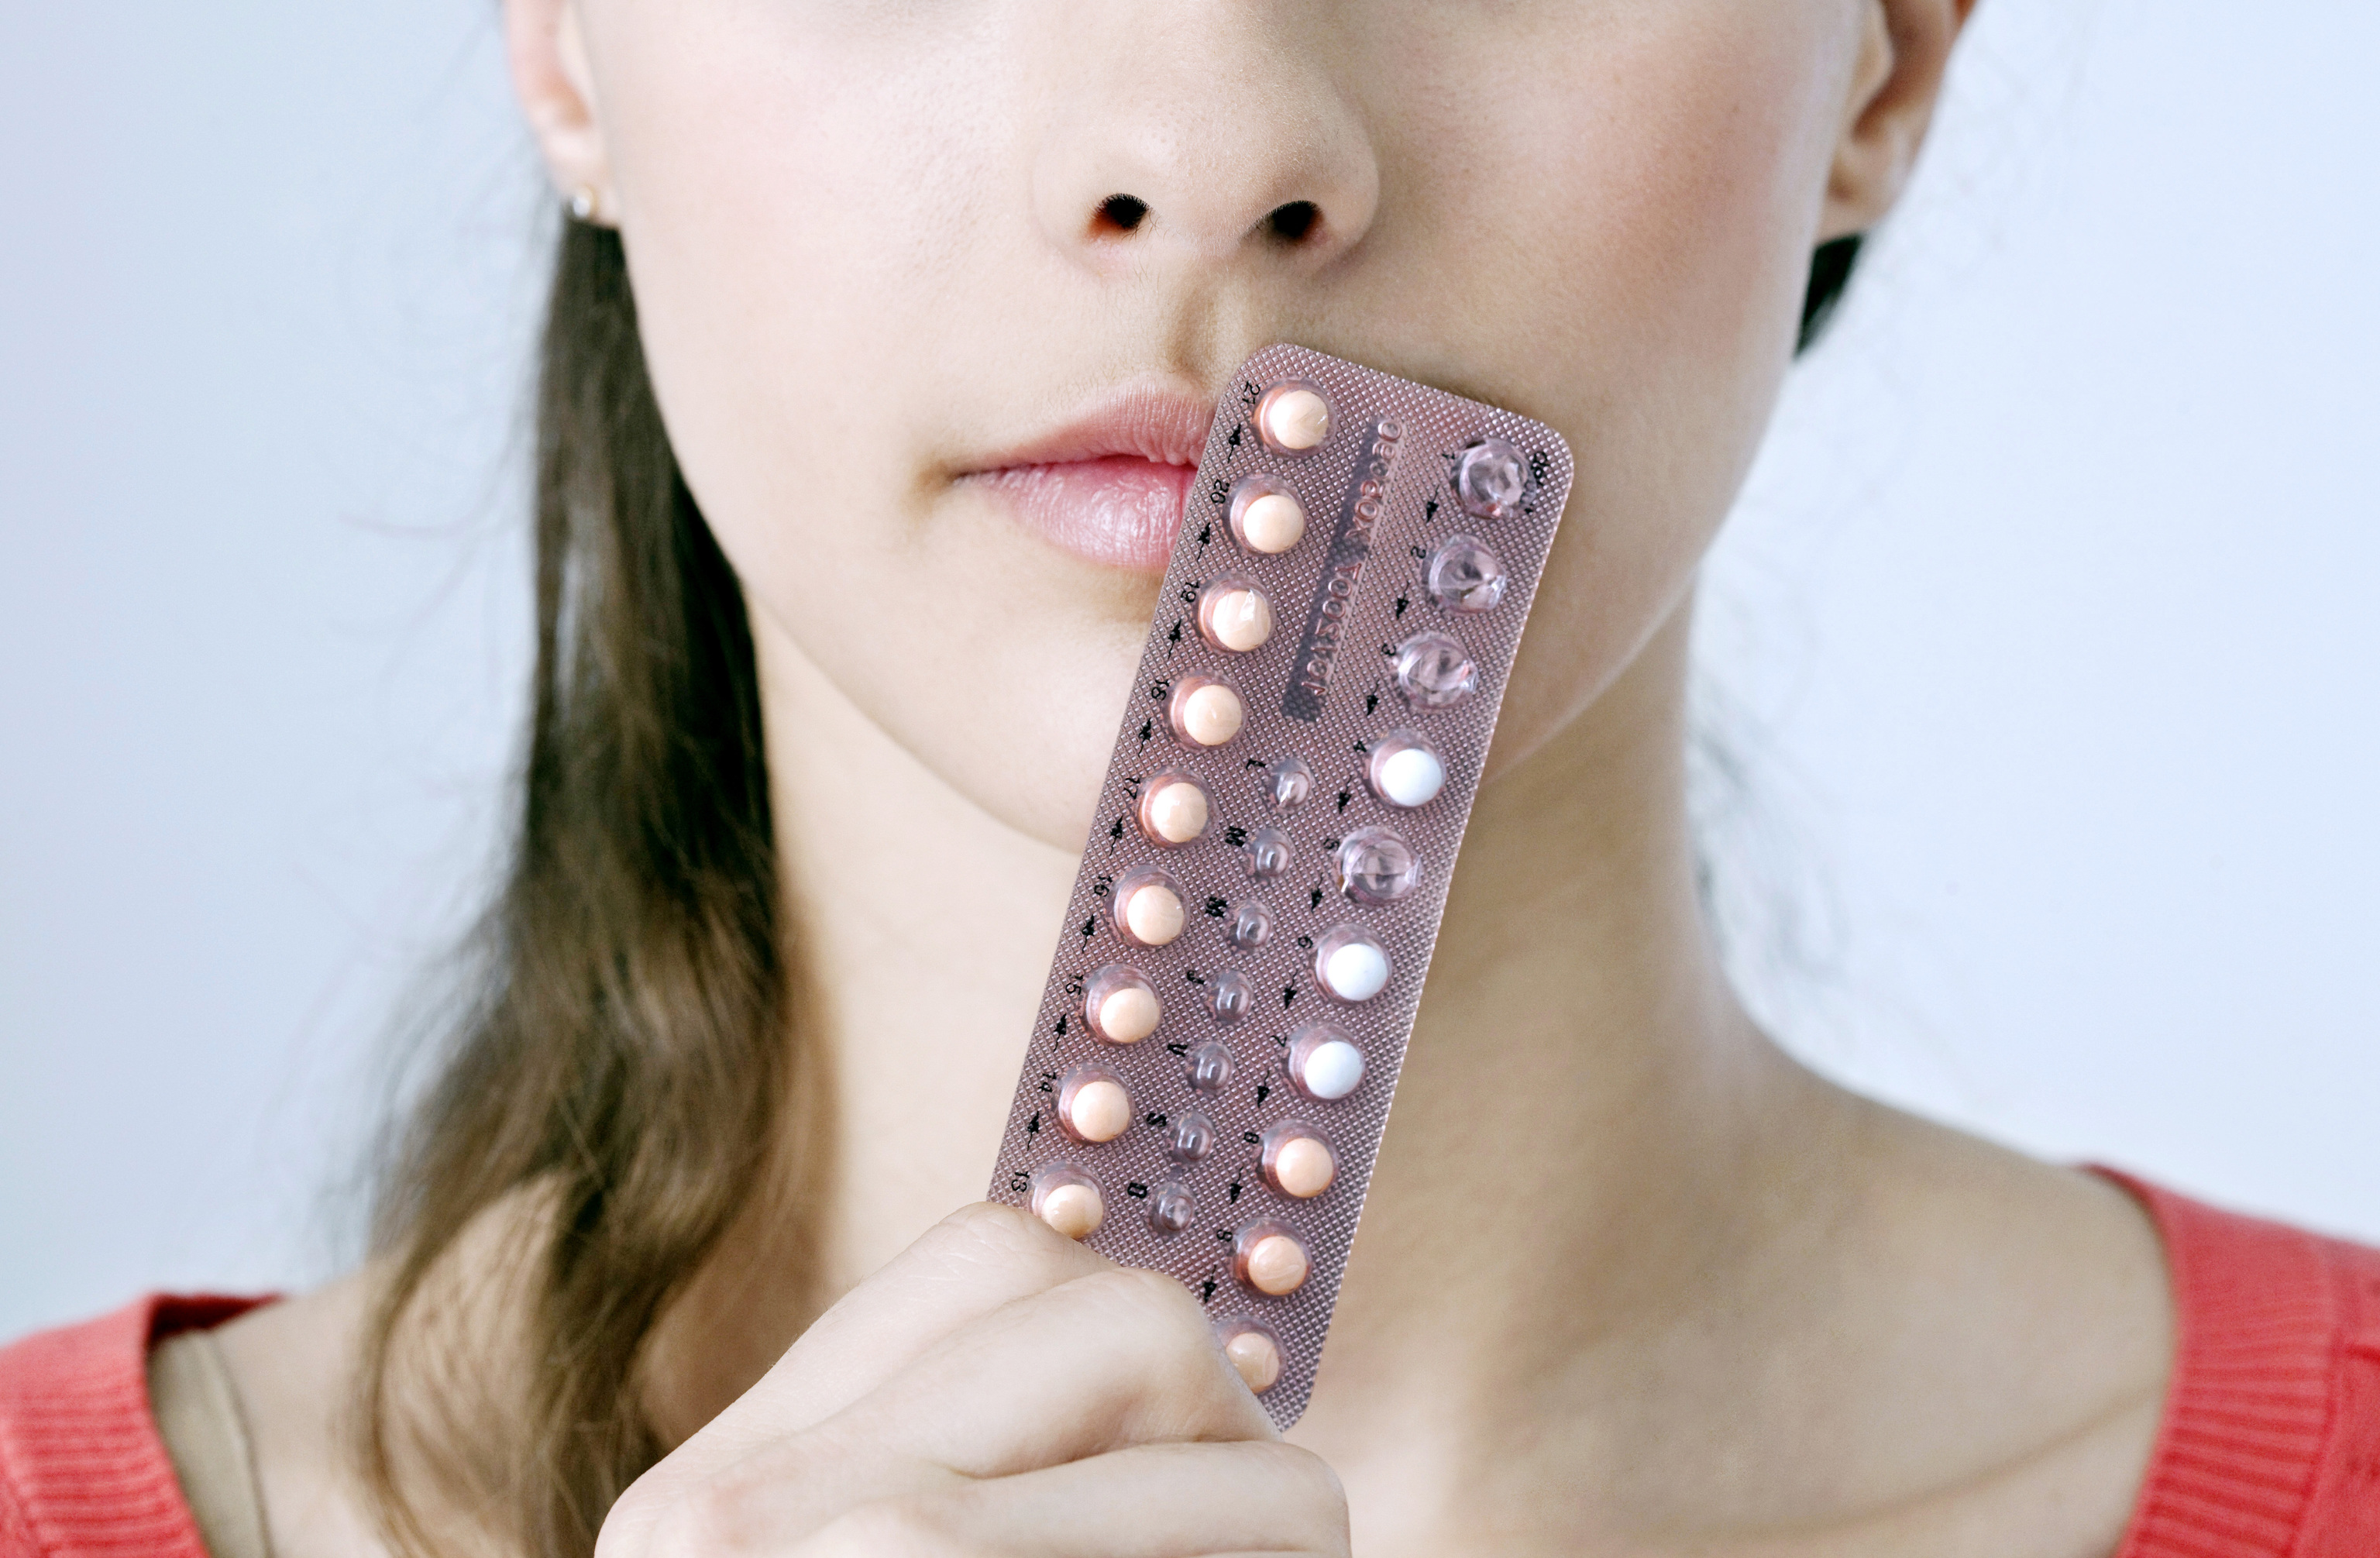 ALT: Las mujeres estn dejando de tomar la pldora anticonceptiva